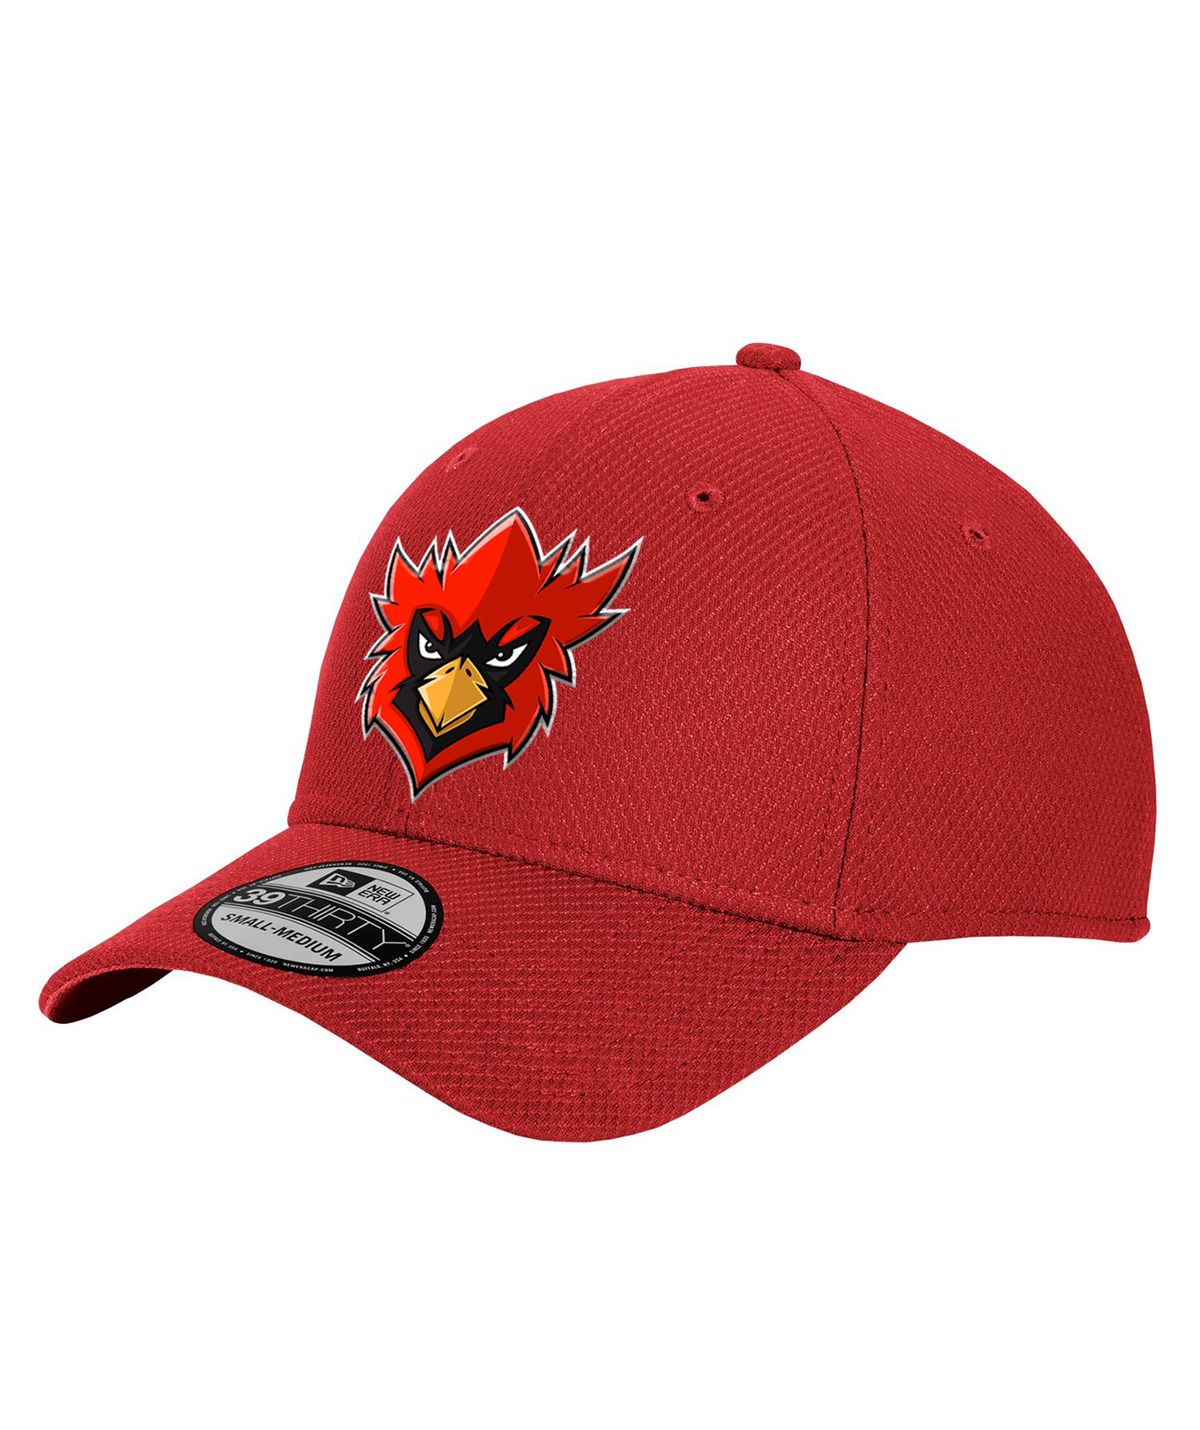 Innisfil Cardinals New Era 39THIRTY Stretchfit Cap - Red